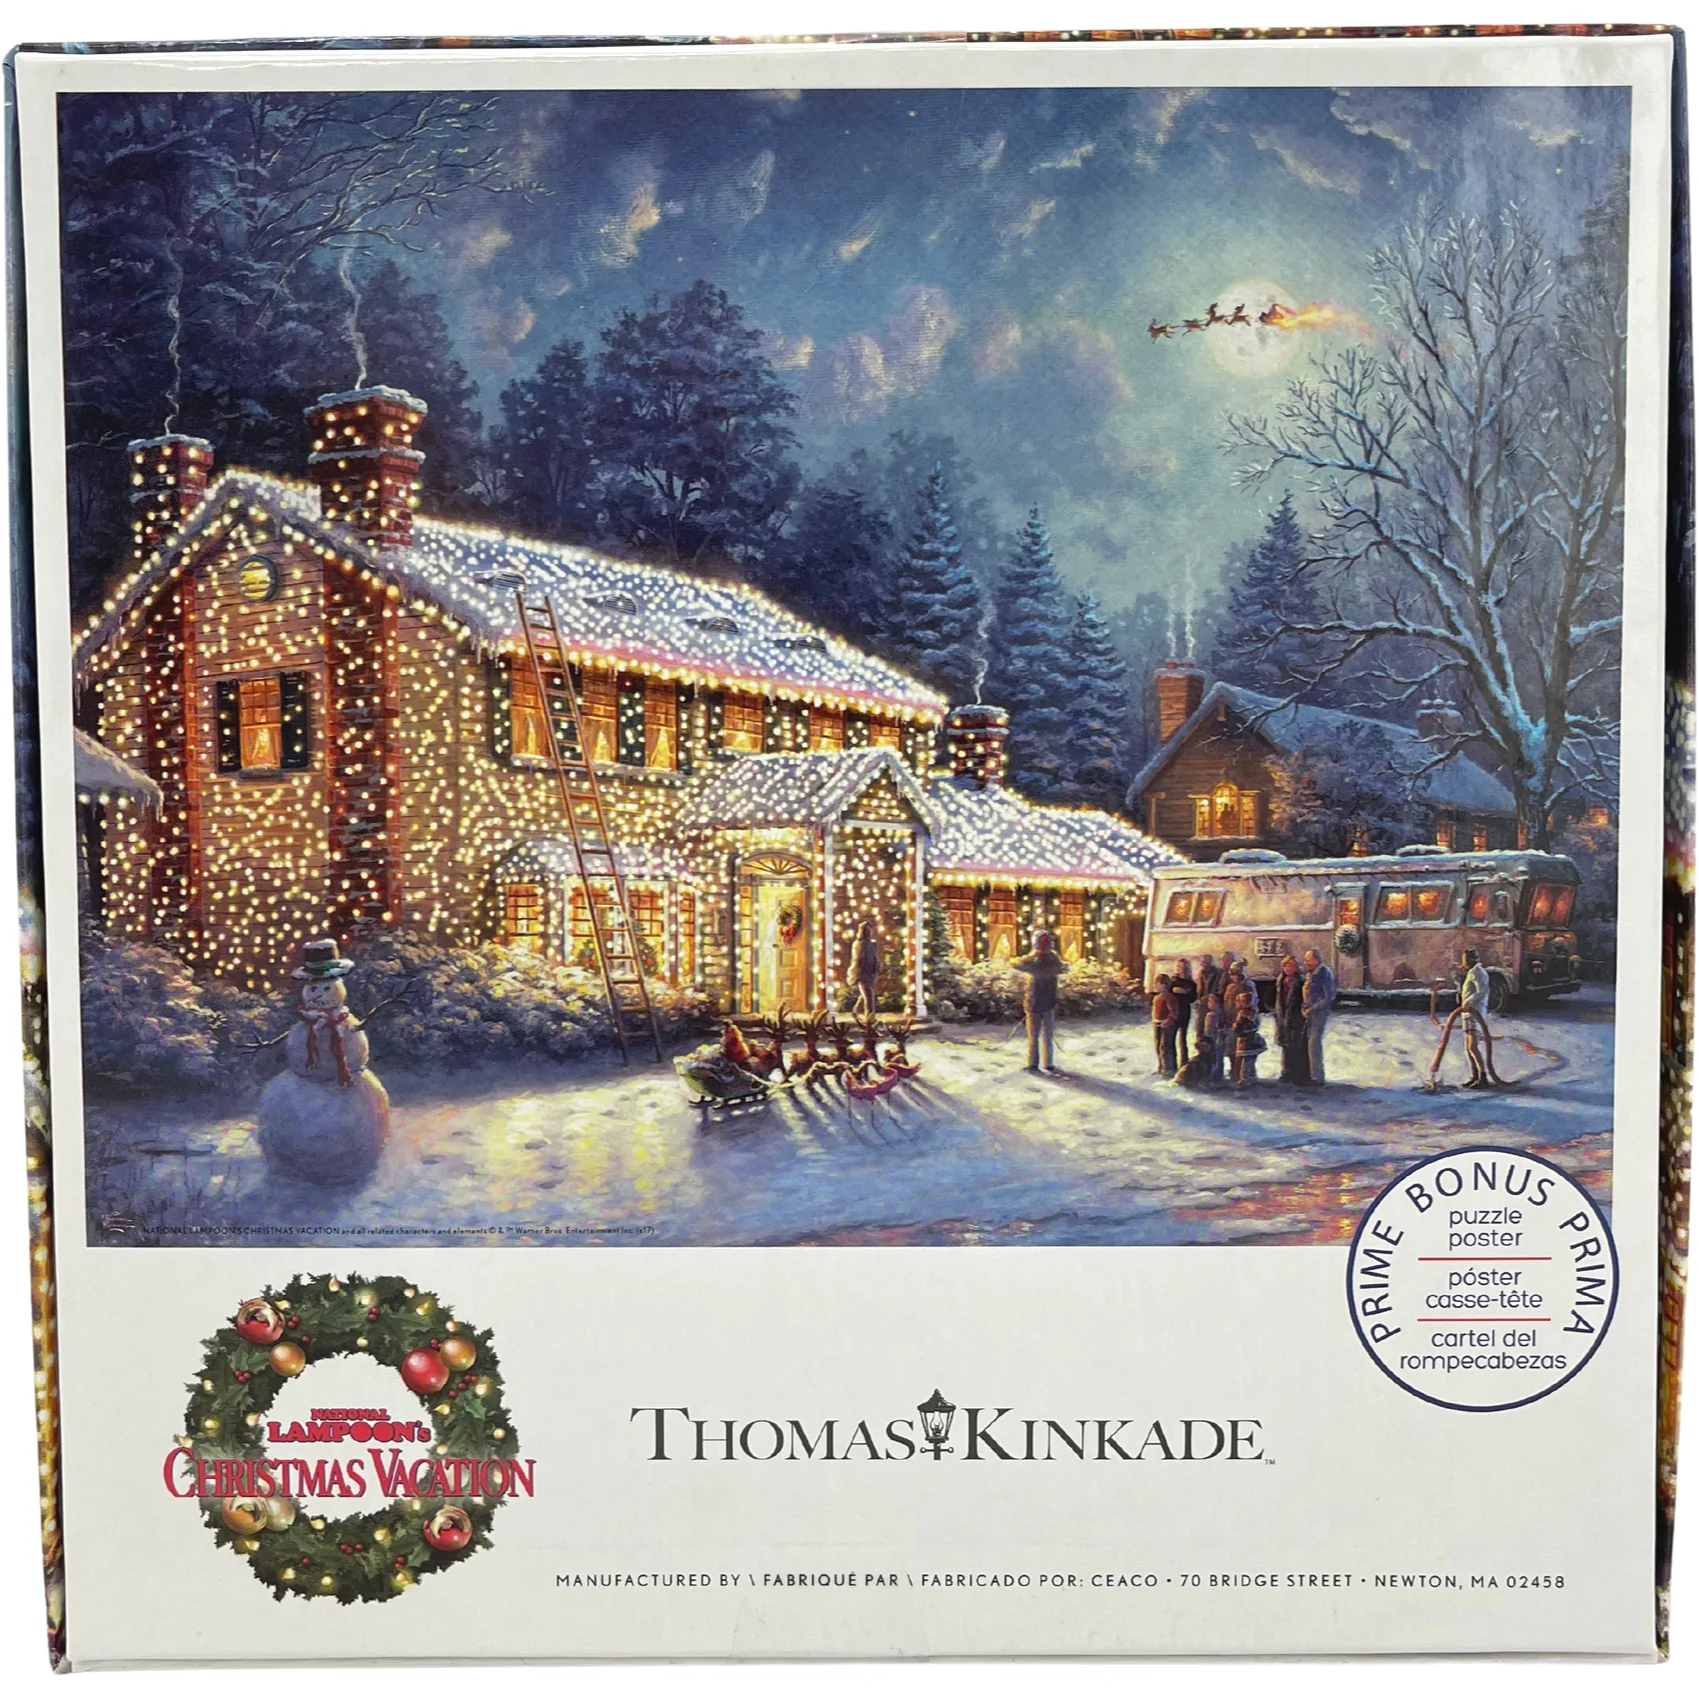 Thomas Kinkade Christmas Themed Jigsaw Puzzle / 300 Piece / Christmas Vacation / A Christmas Story